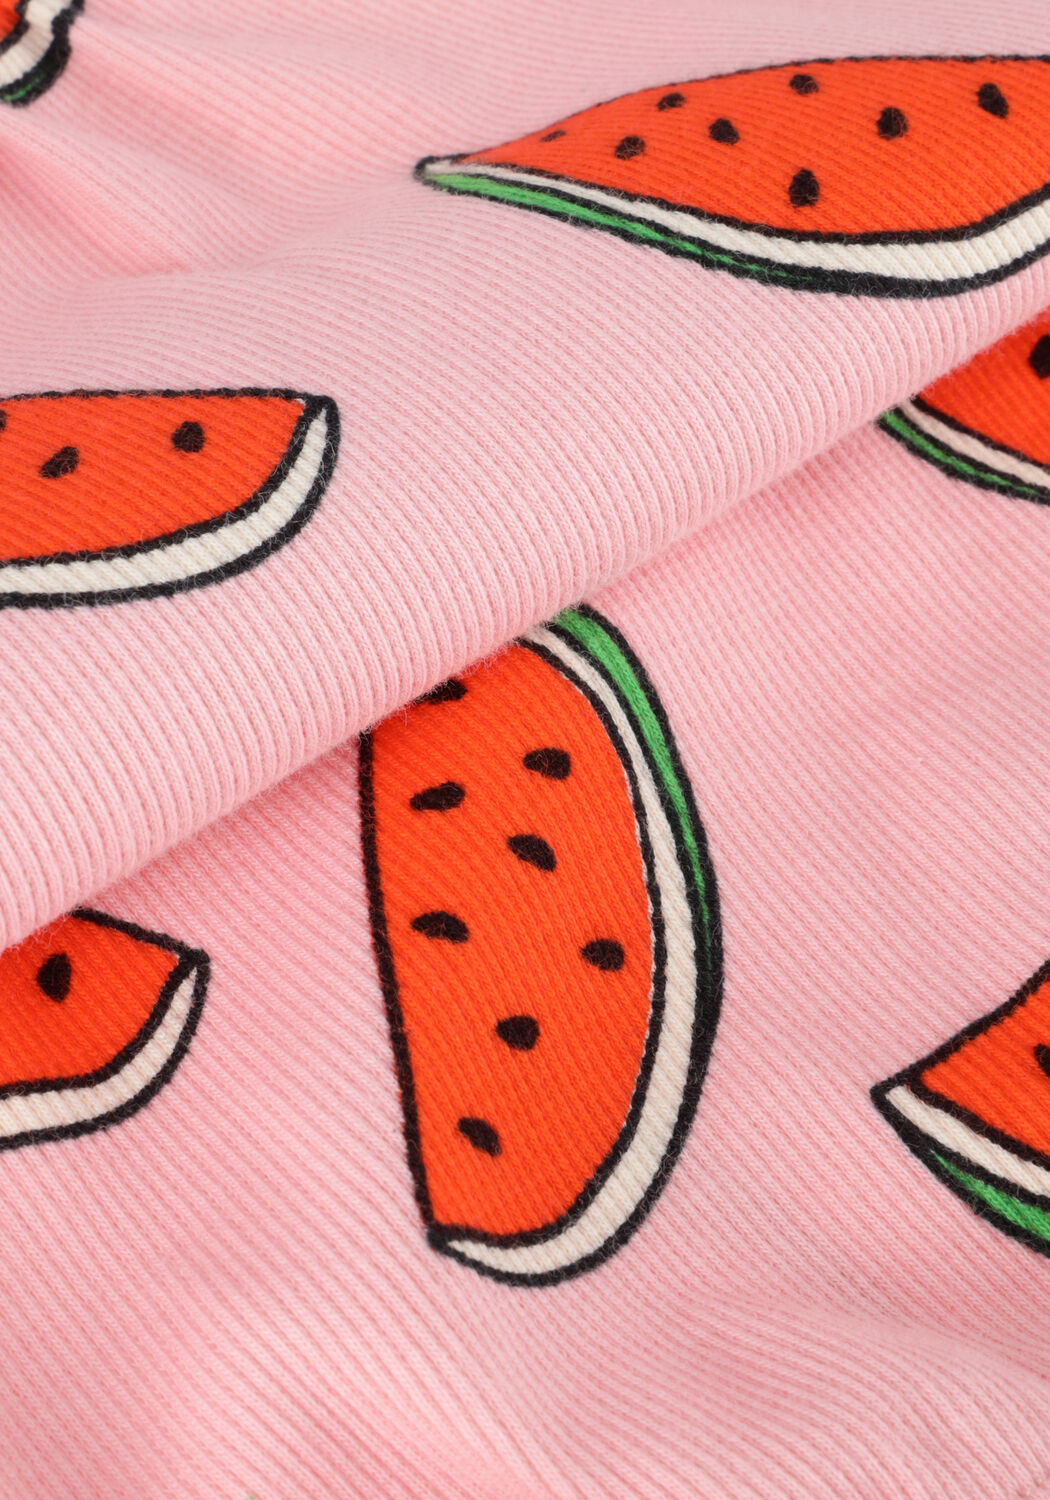 CARLIJNQ Meisjes Tops & T-shirts Watermelon Puffed Short Sleeve Roze